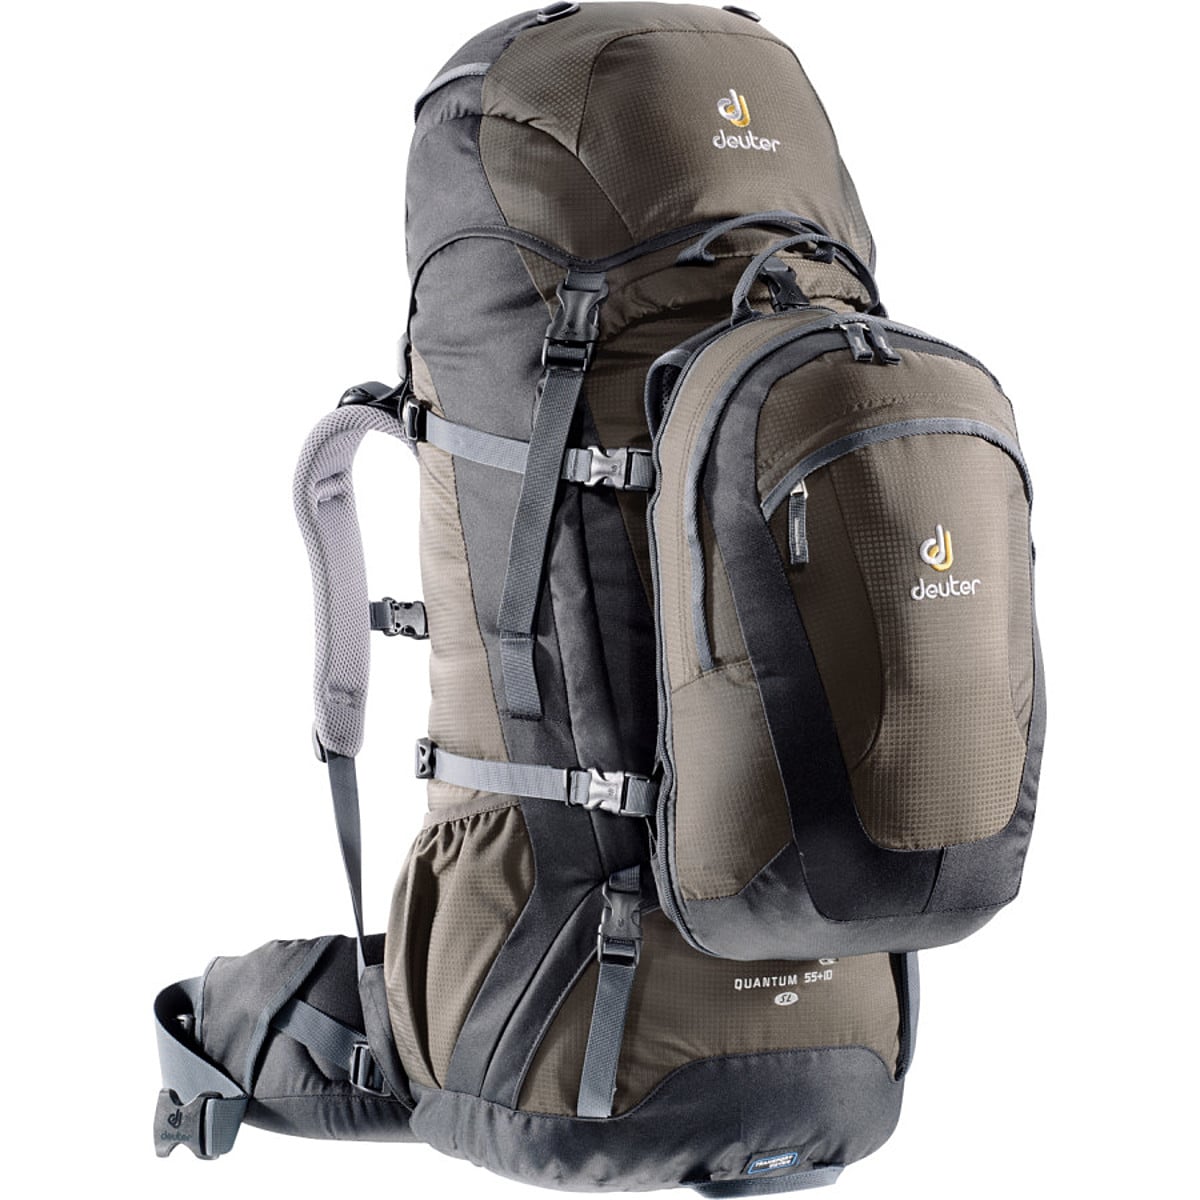 Flint w/ Daypack NEW Deuter Quantum 55+10 Hiking Travel Backpack Anthracite 